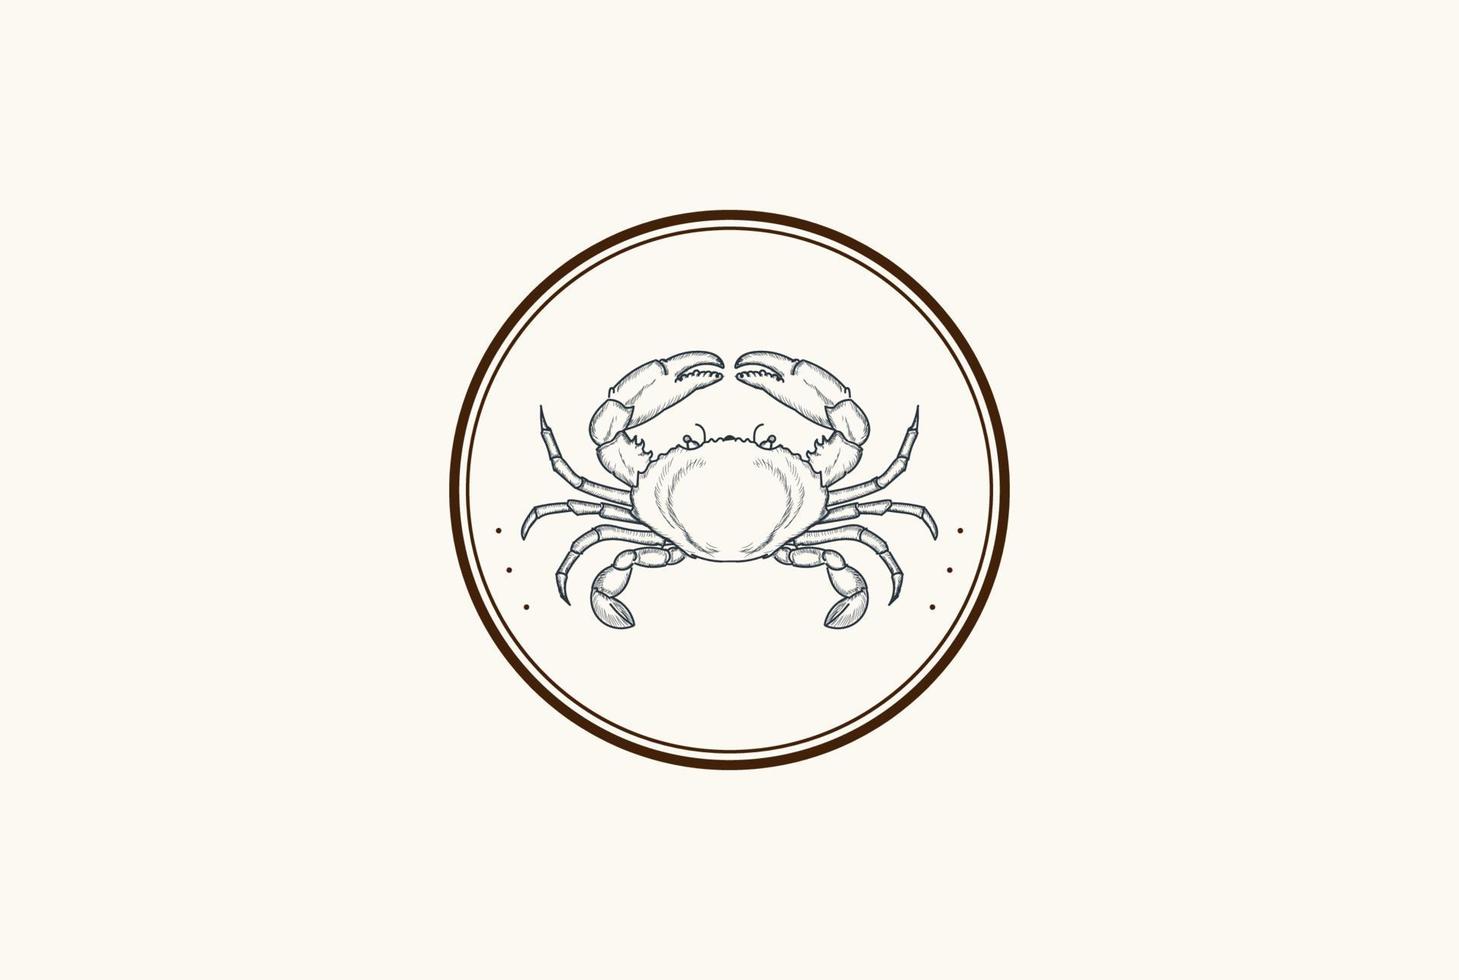 Retro Vintage Circular Crab for Seafood Restaurant or Product Label Logo Design Vector